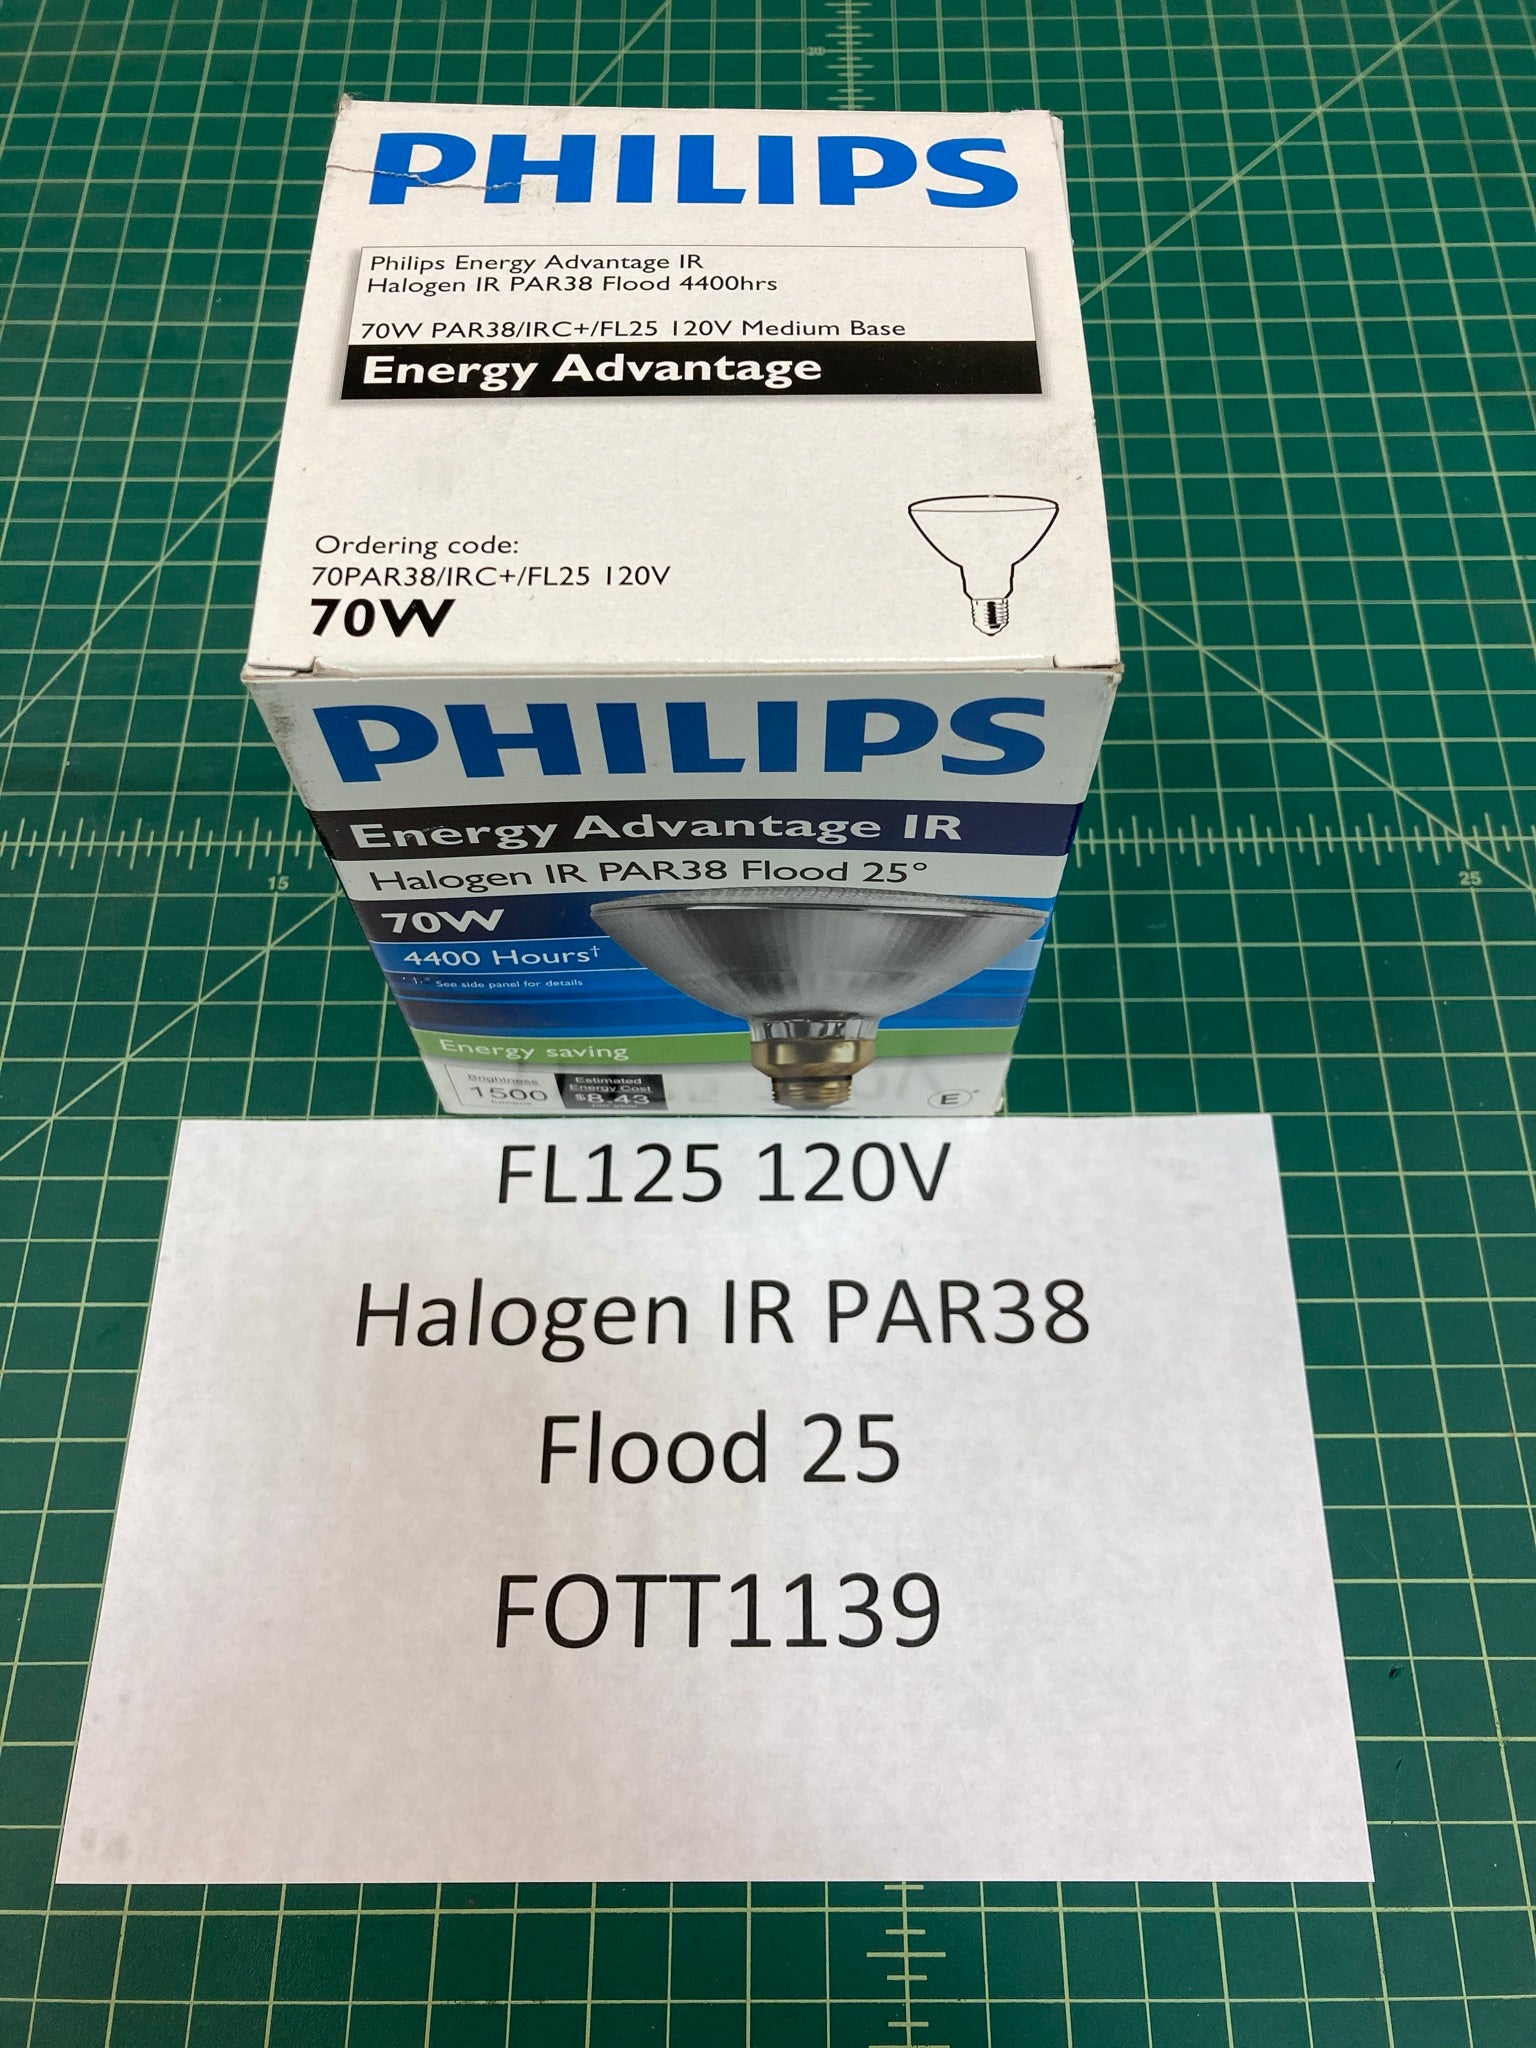 Halogen IR PAR38 Flood 25